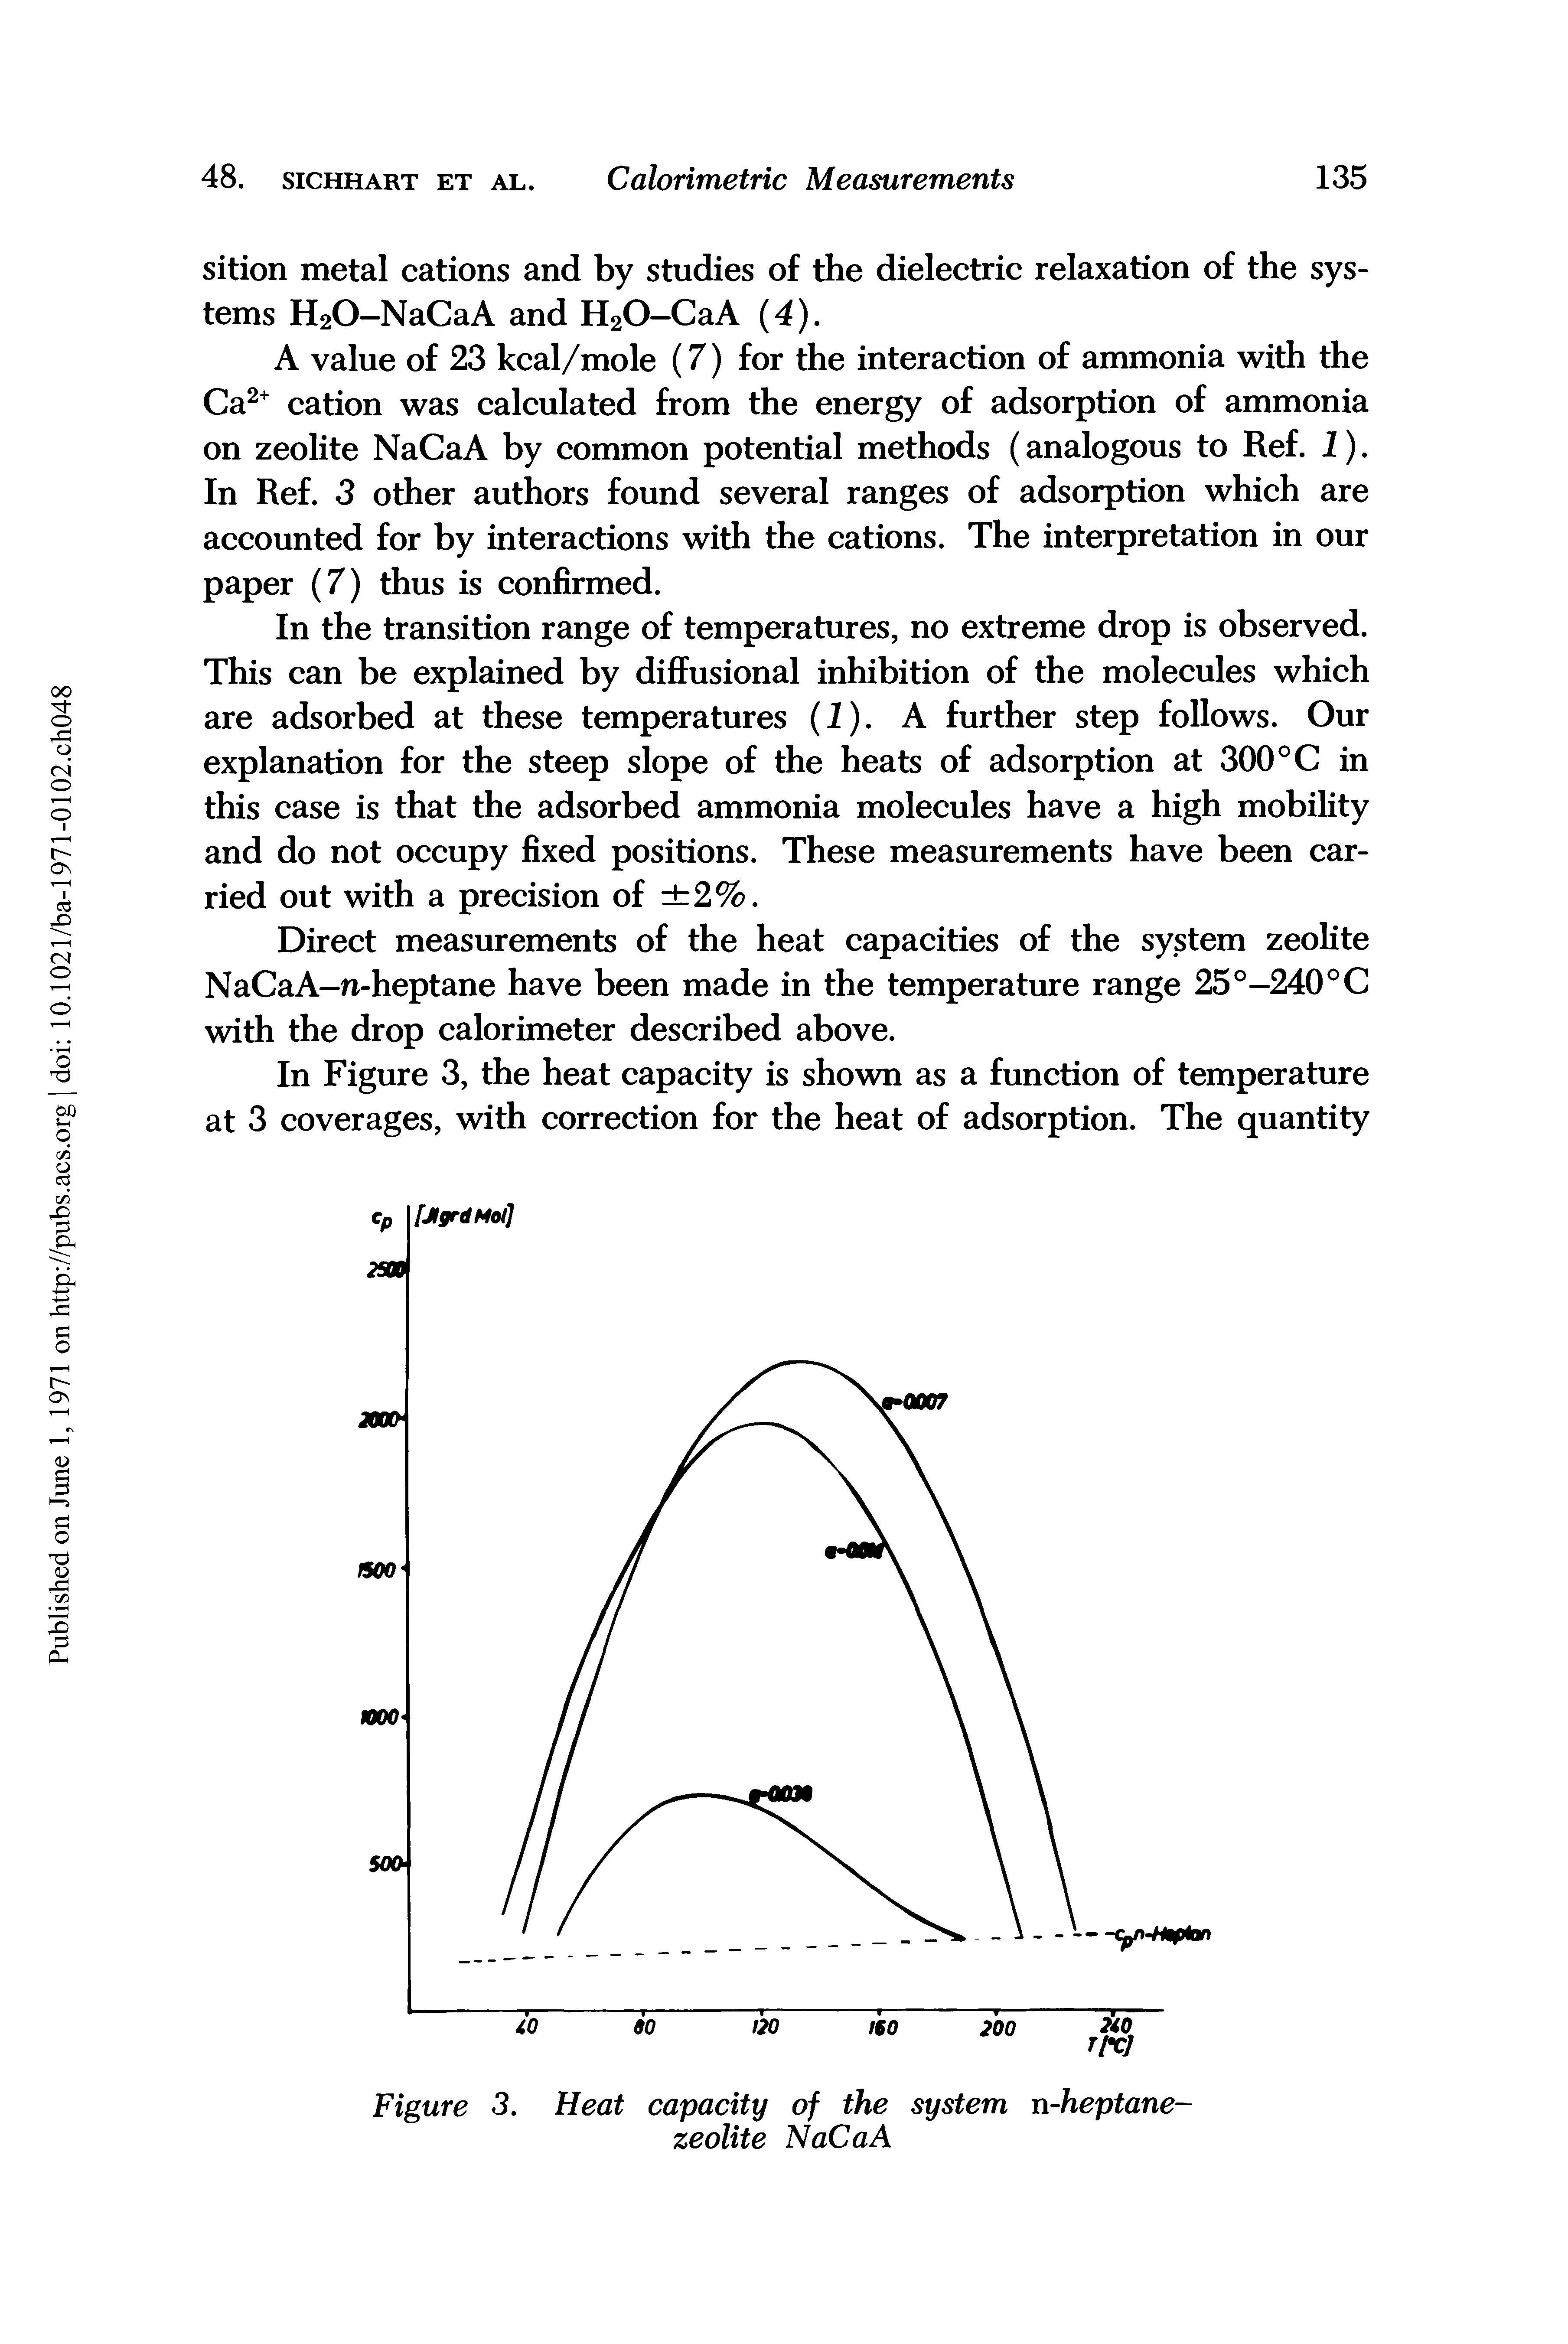 Figure 3. Heat capacity of the system n-heptane zeolite NaCaA...